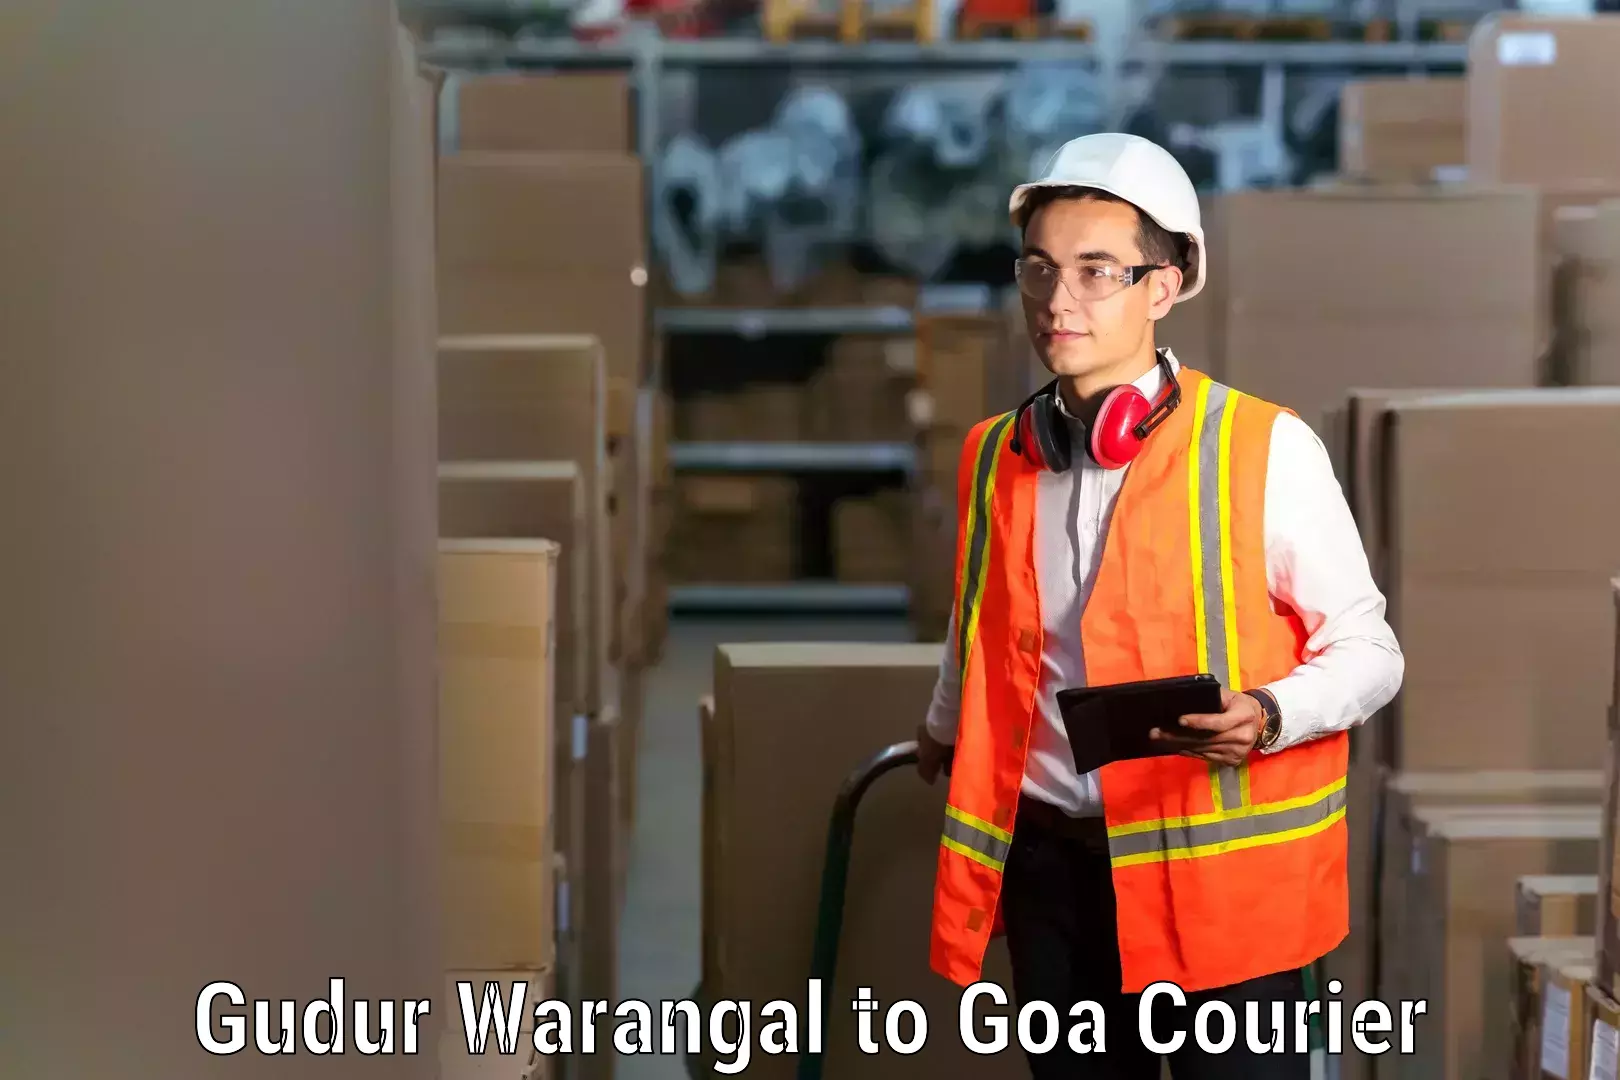 Furniture delivery service Gudur Warangal to IIT Goa